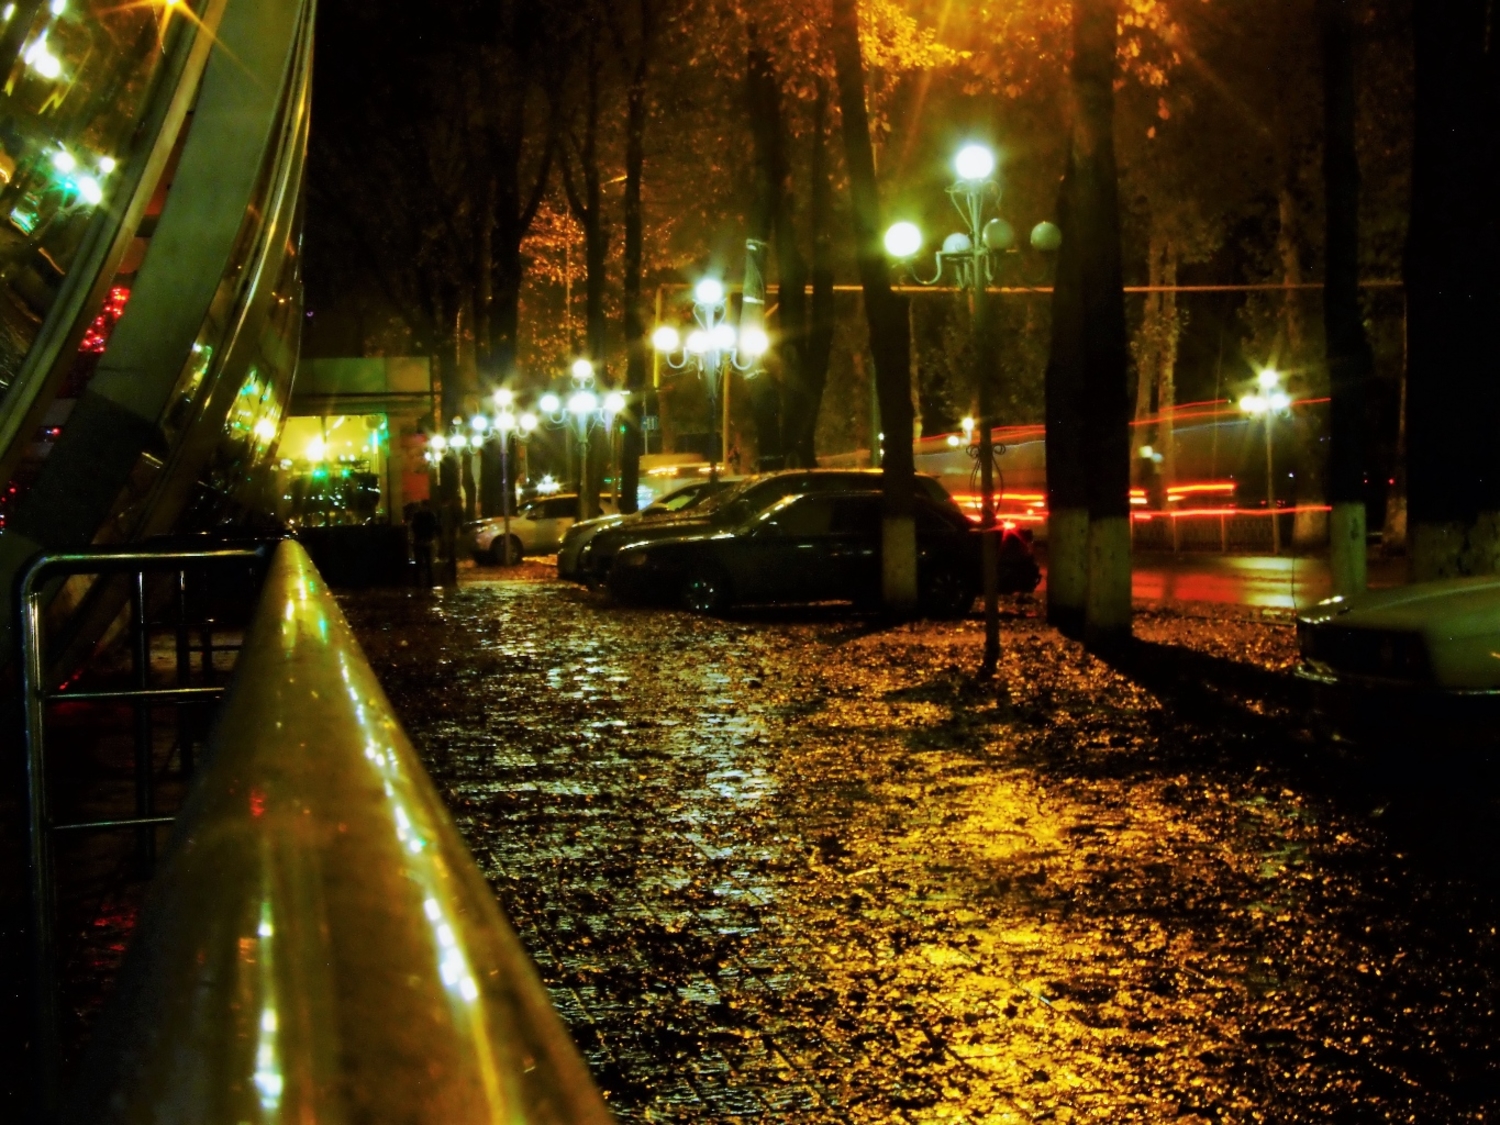 Вечер дождь осенняя. Осенний вечер в городе. Осенняя ночь в городе. Дождливый вечер в городе. Осень город дождь.